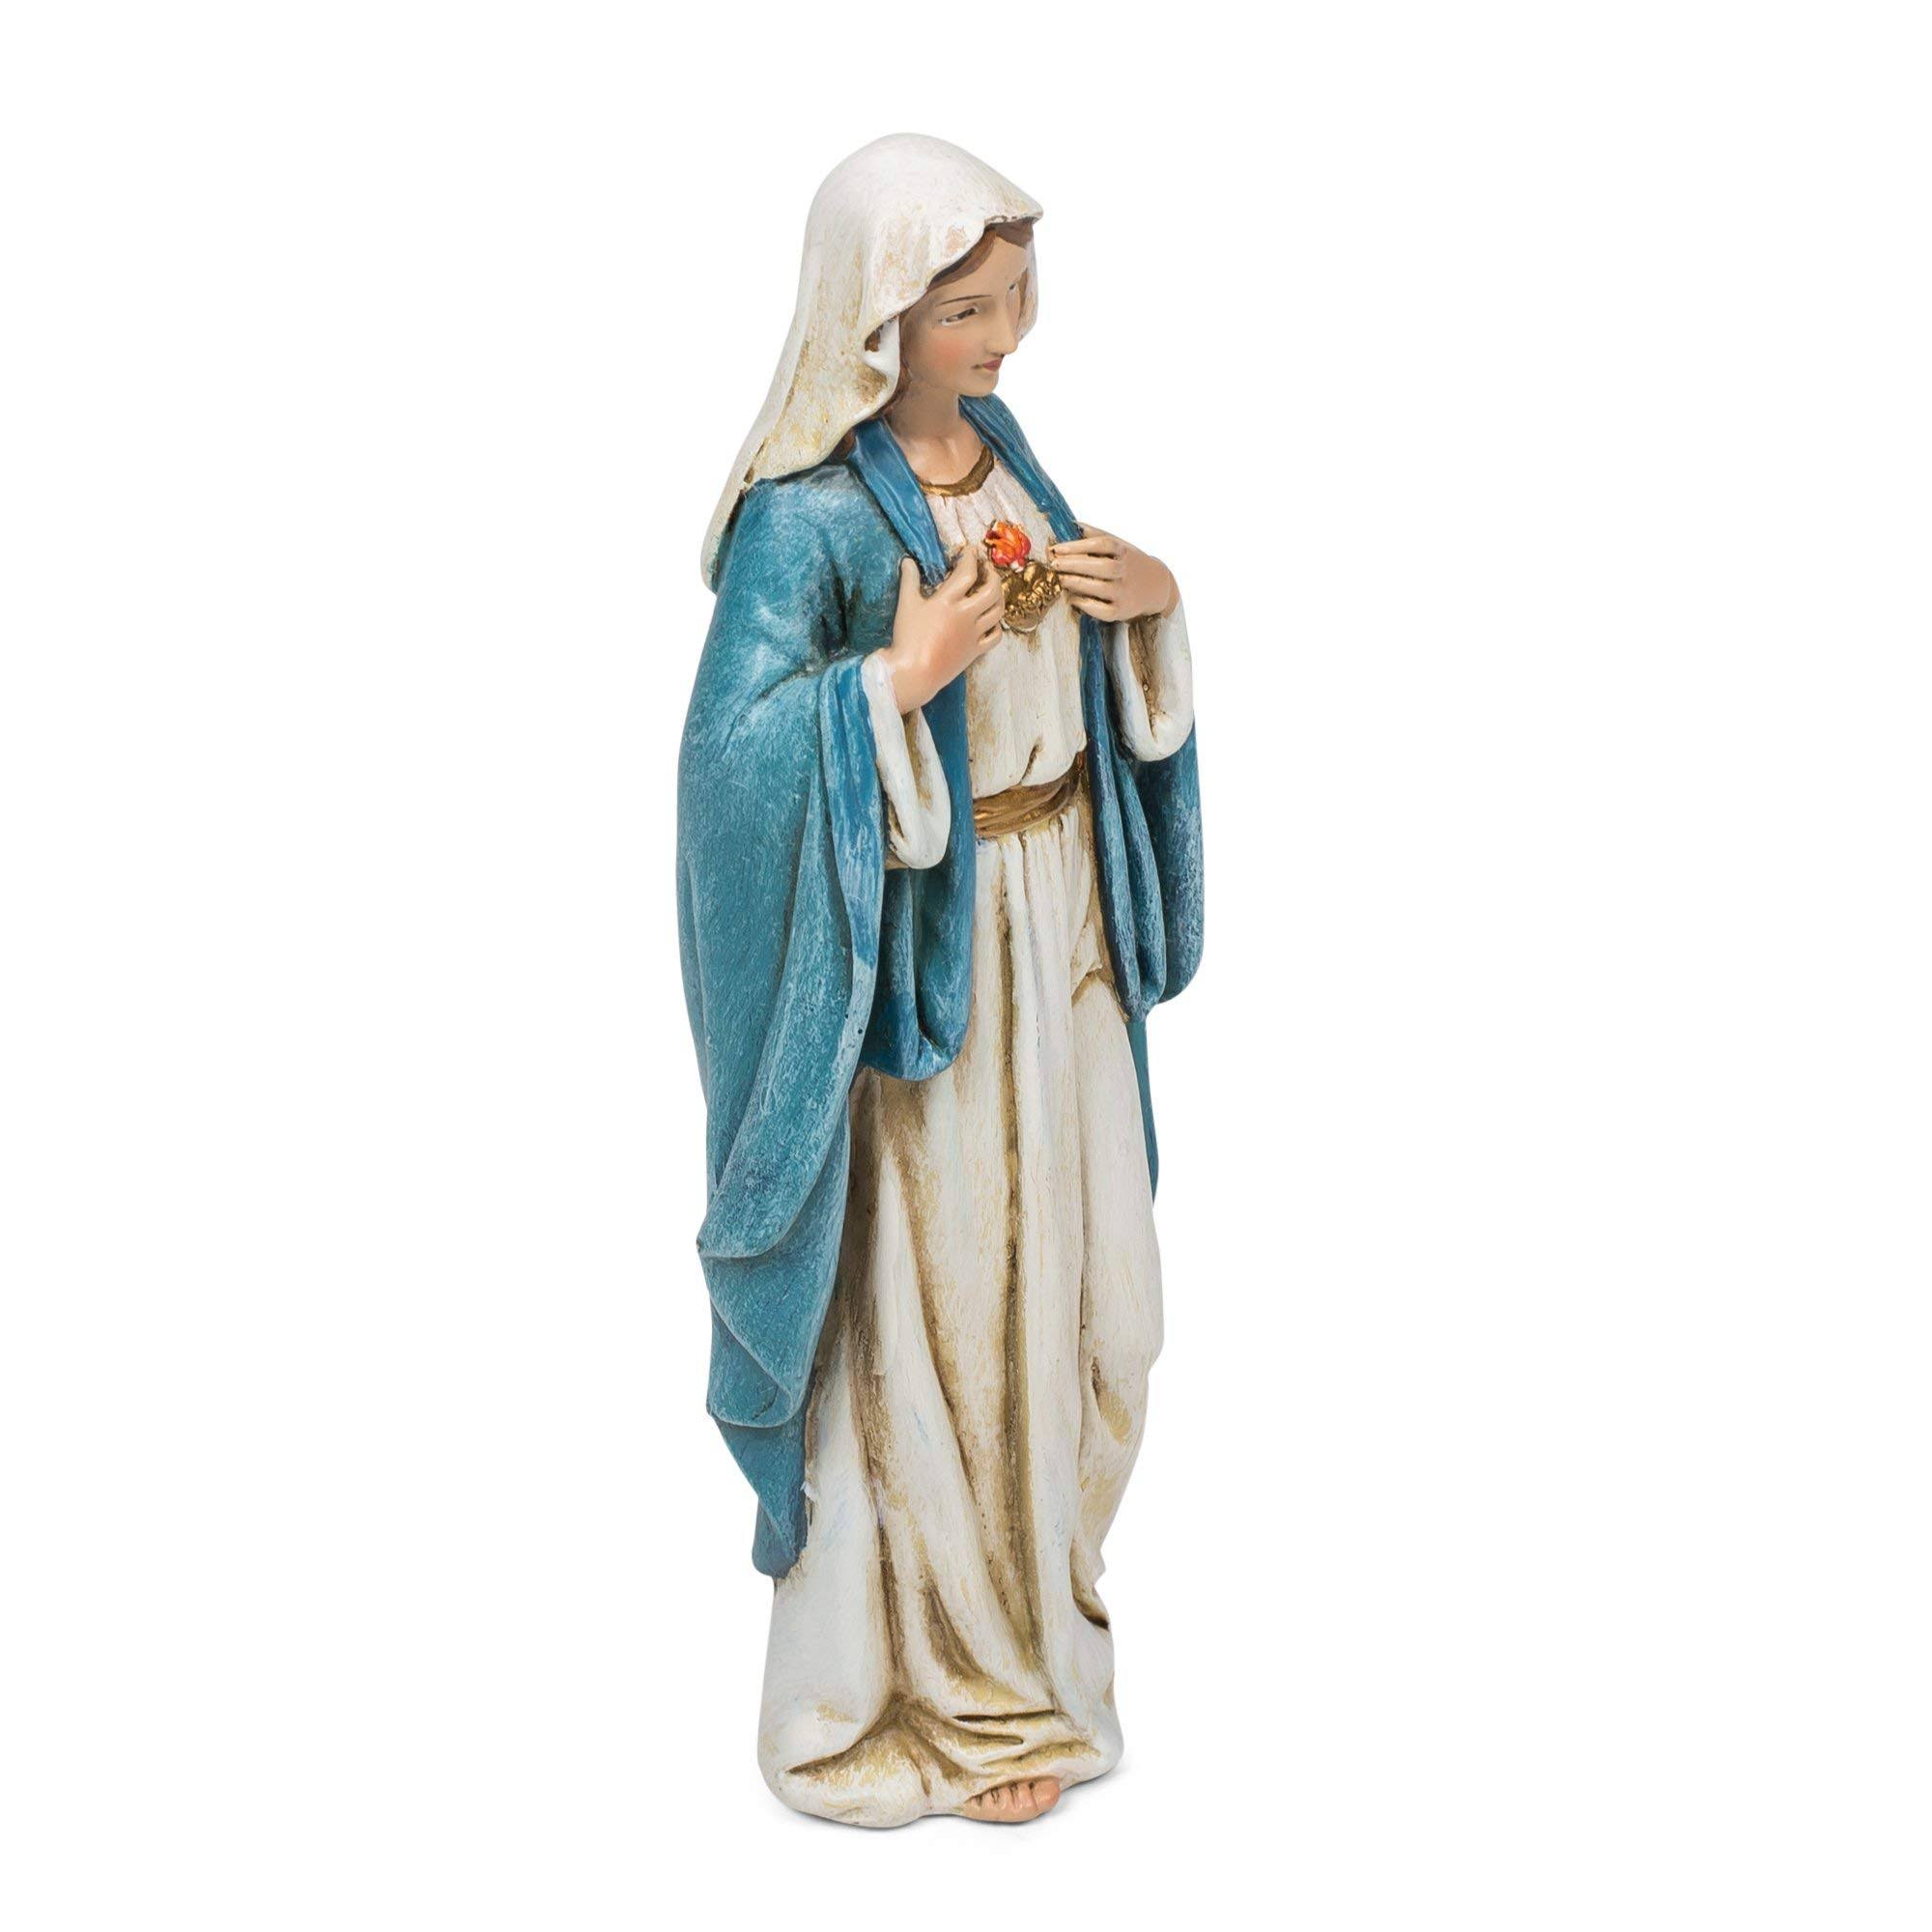 Joseph Studio Immaculate Heart of Mary Religious Figurine - 6 in